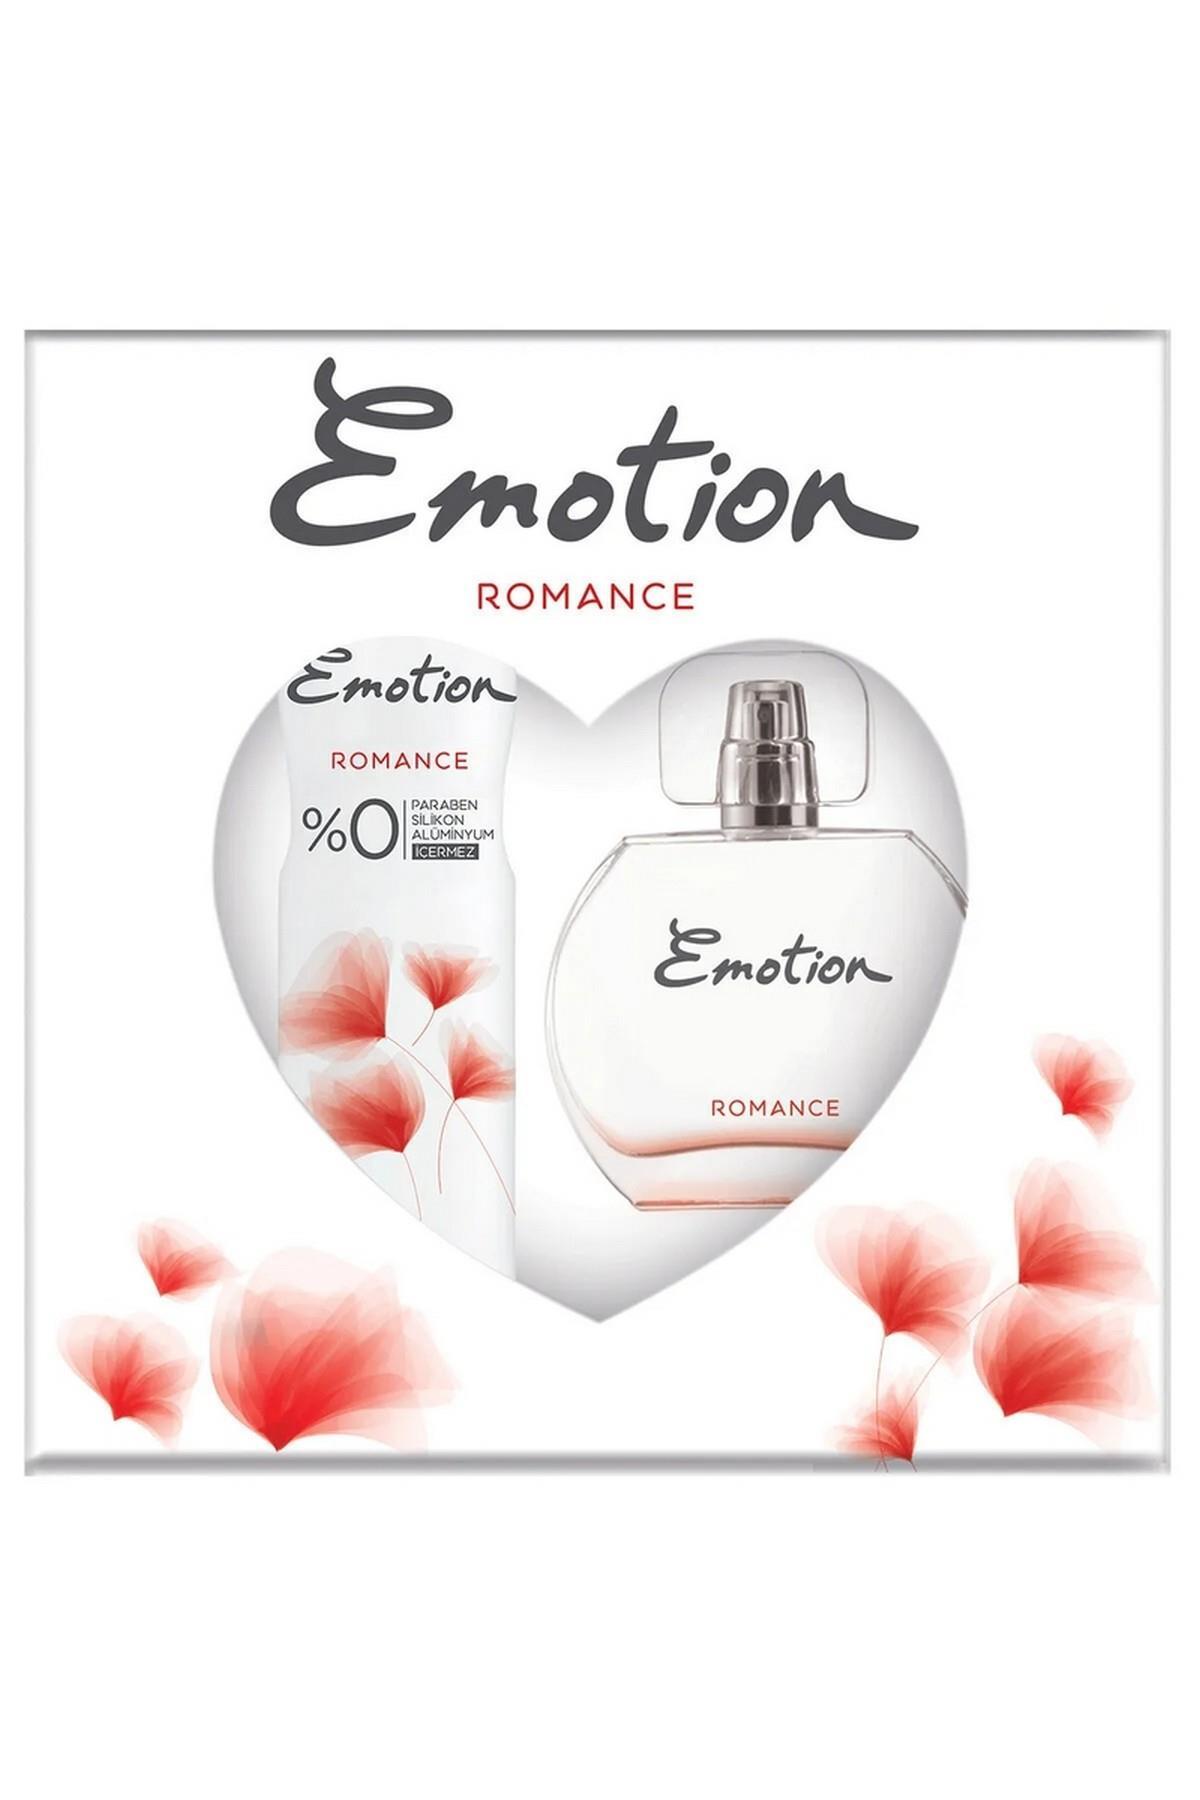 Emotion EDT+ Deo Karton Kofre Romance